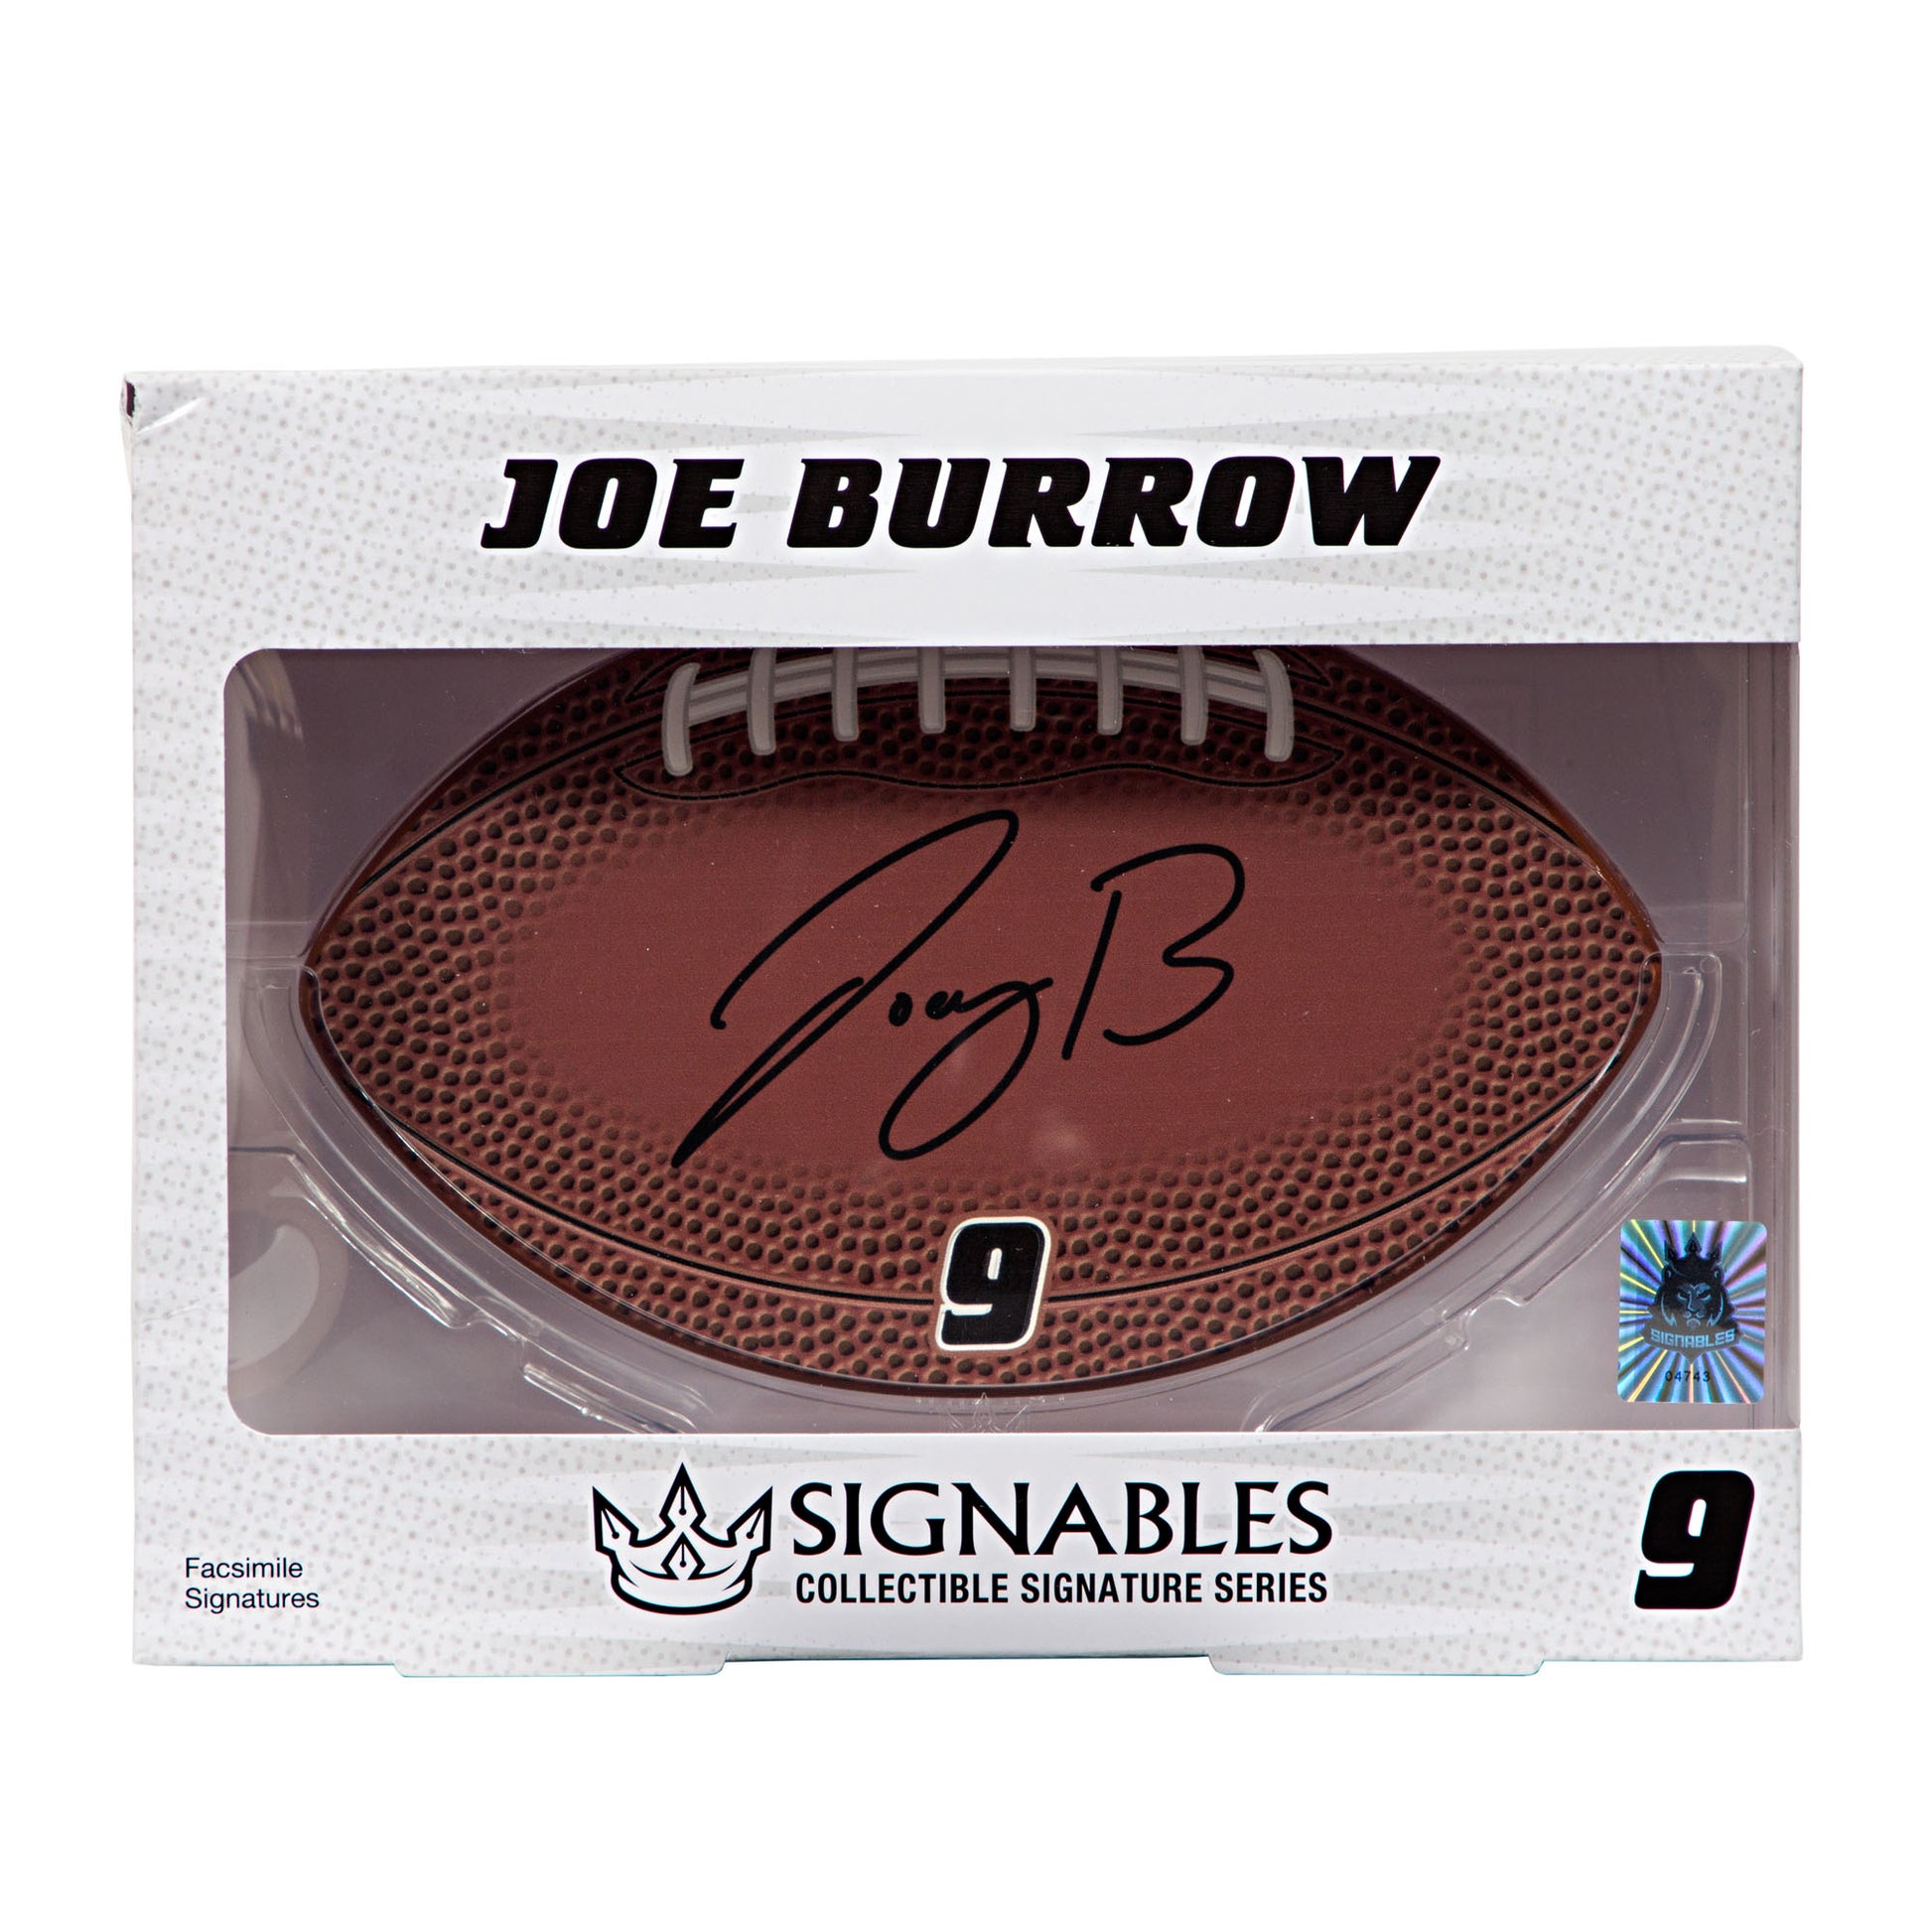 Joe Burrow Memorabilia, Joe Burrow Collectibles, NFL Joe Burrow